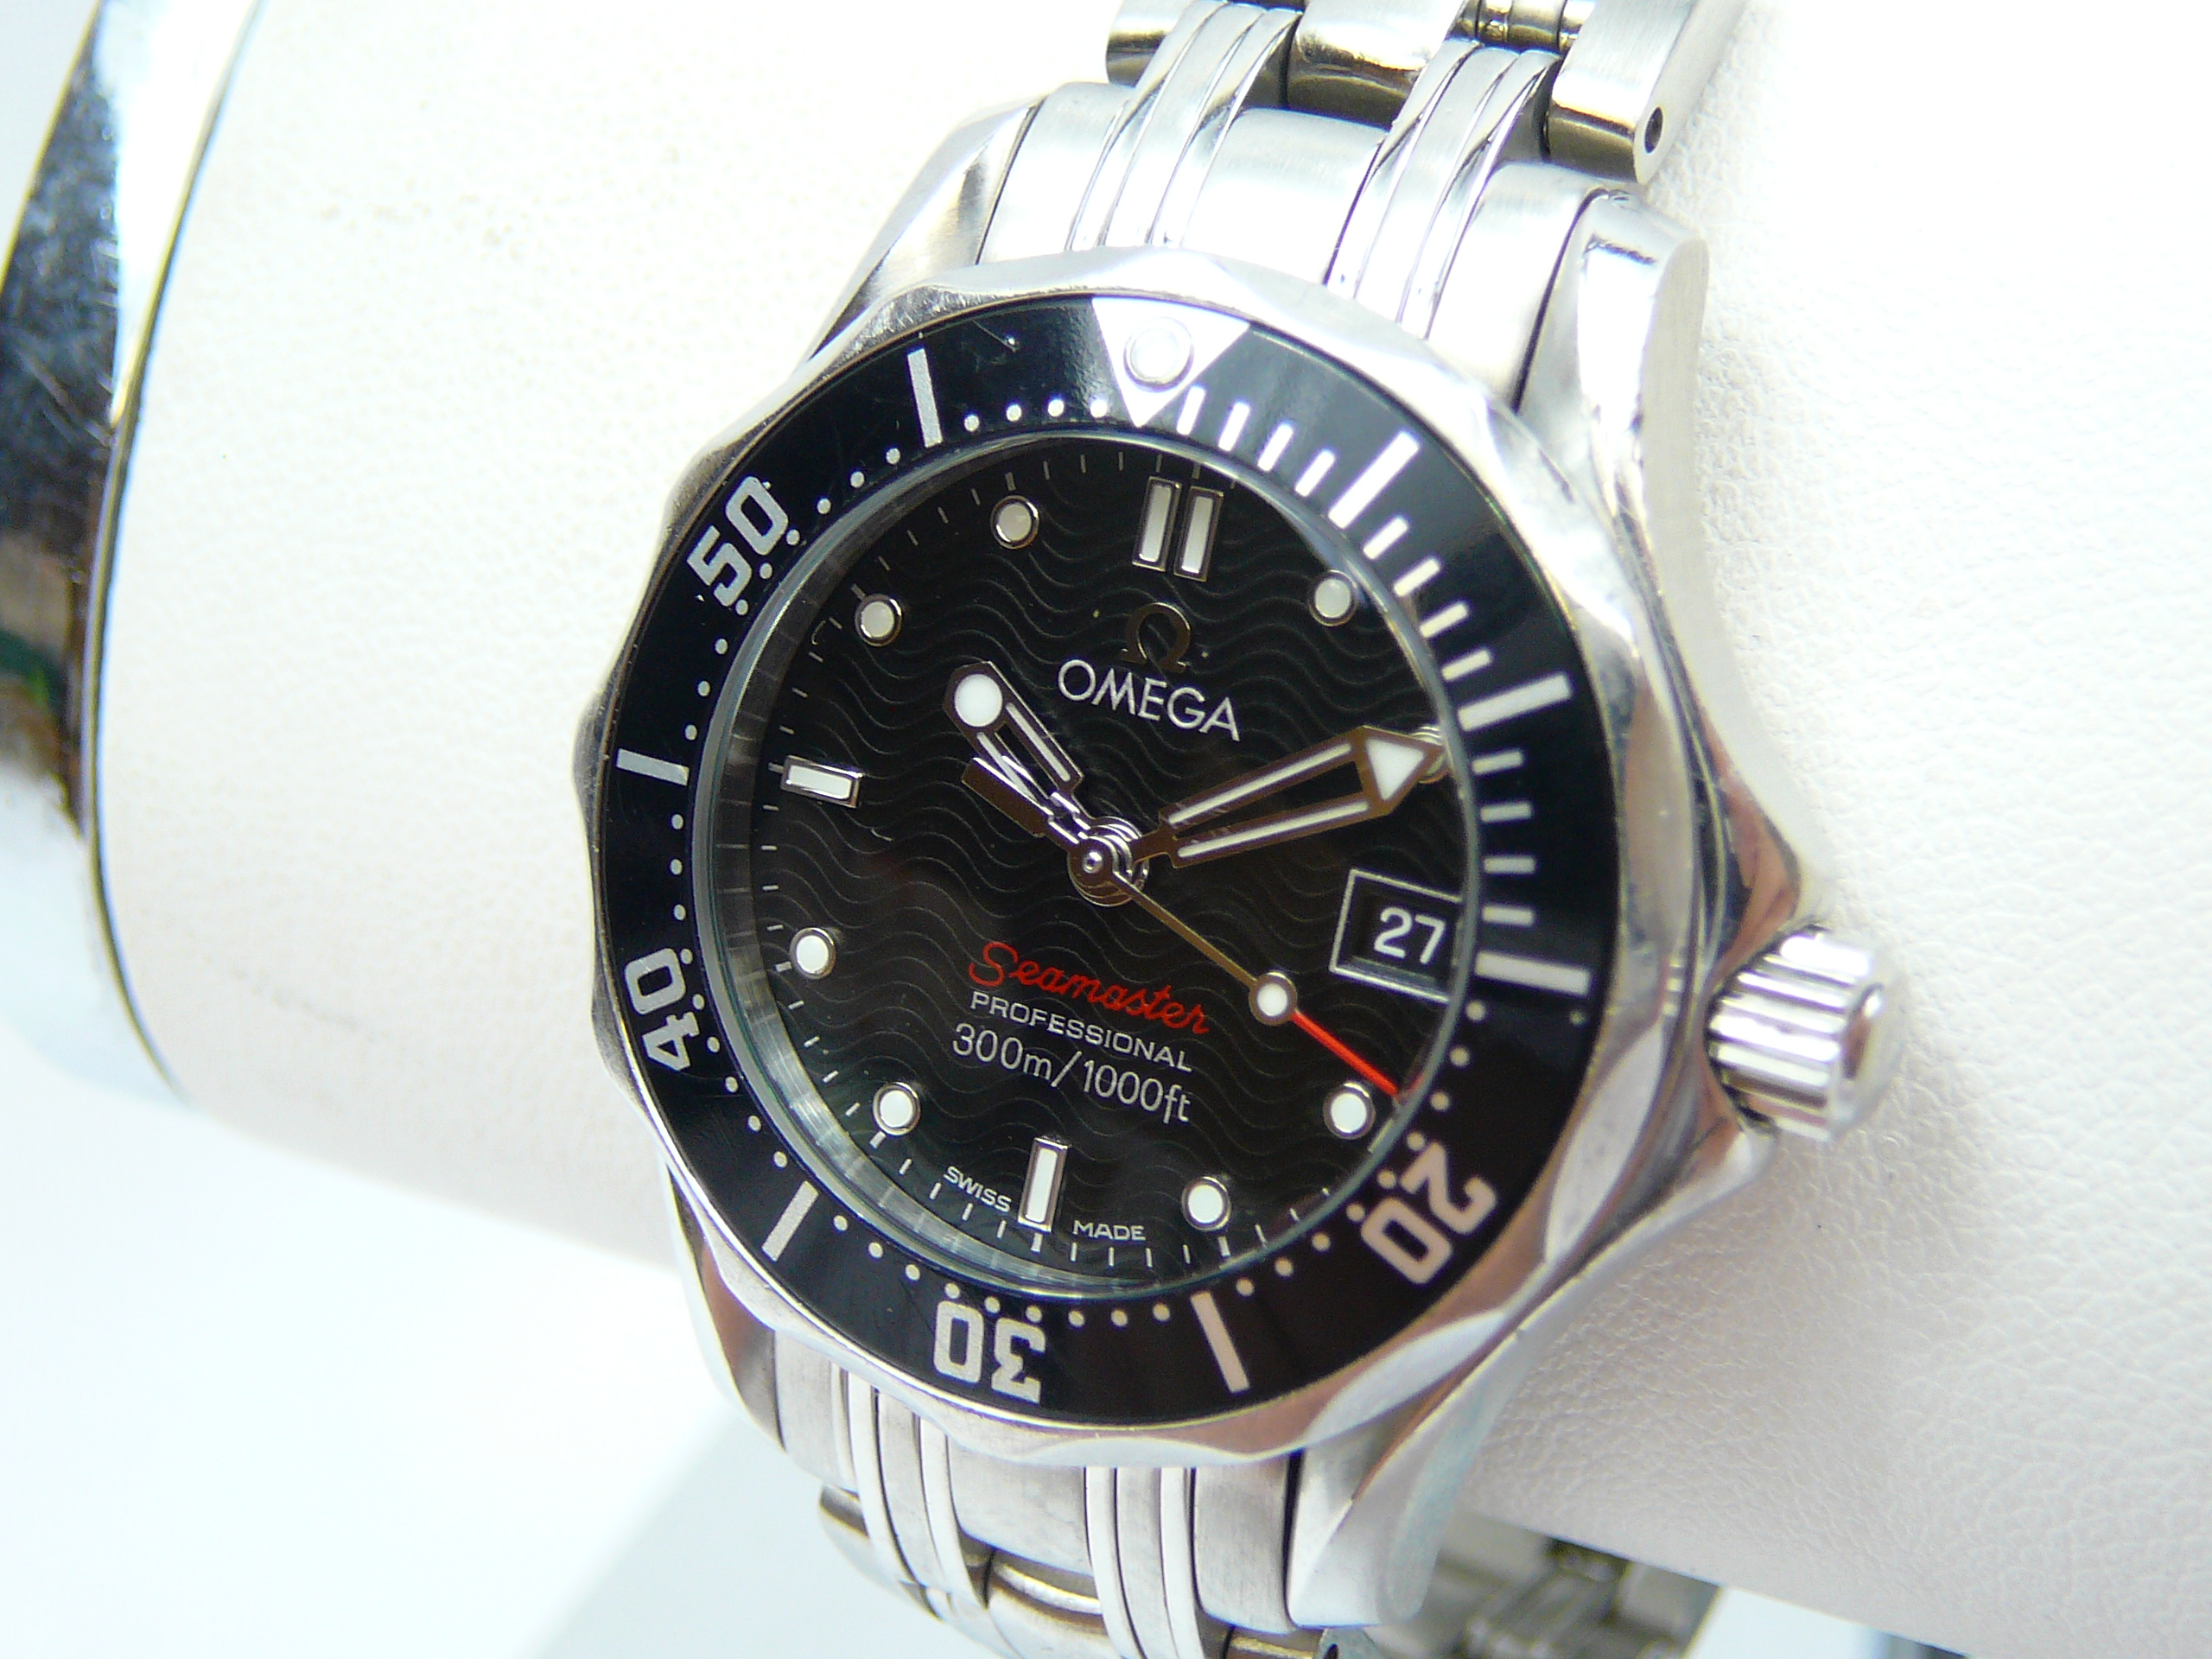 Ladies Omega Wrist Watch - Image 2 of 4